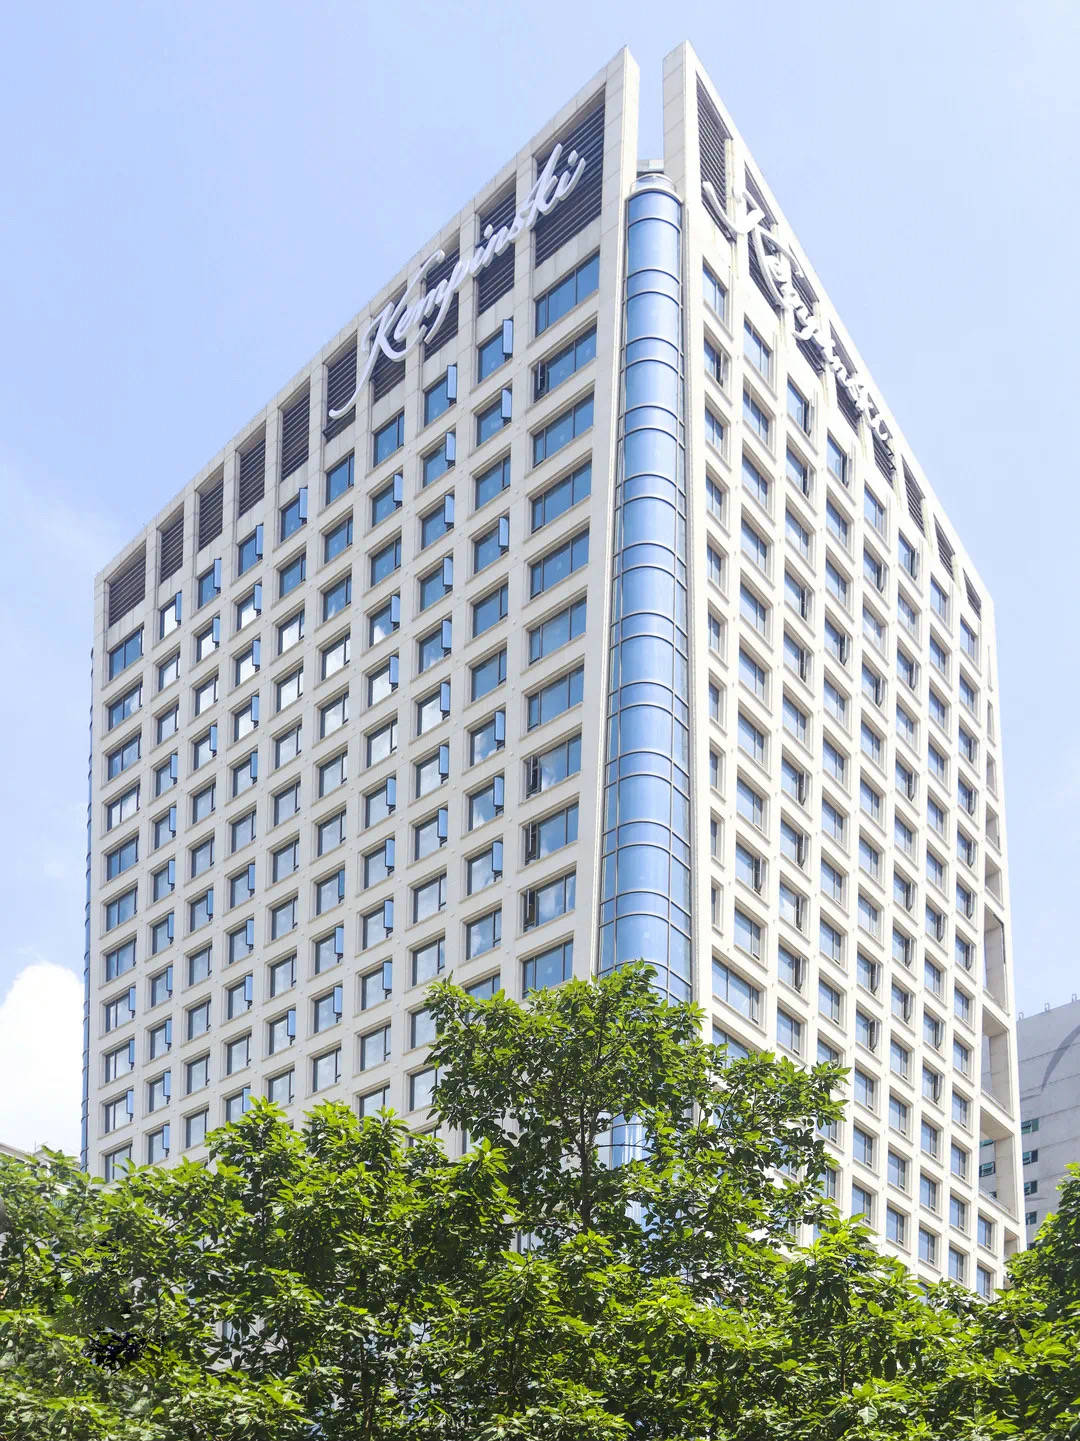 Guangzhou Kempinski hotel